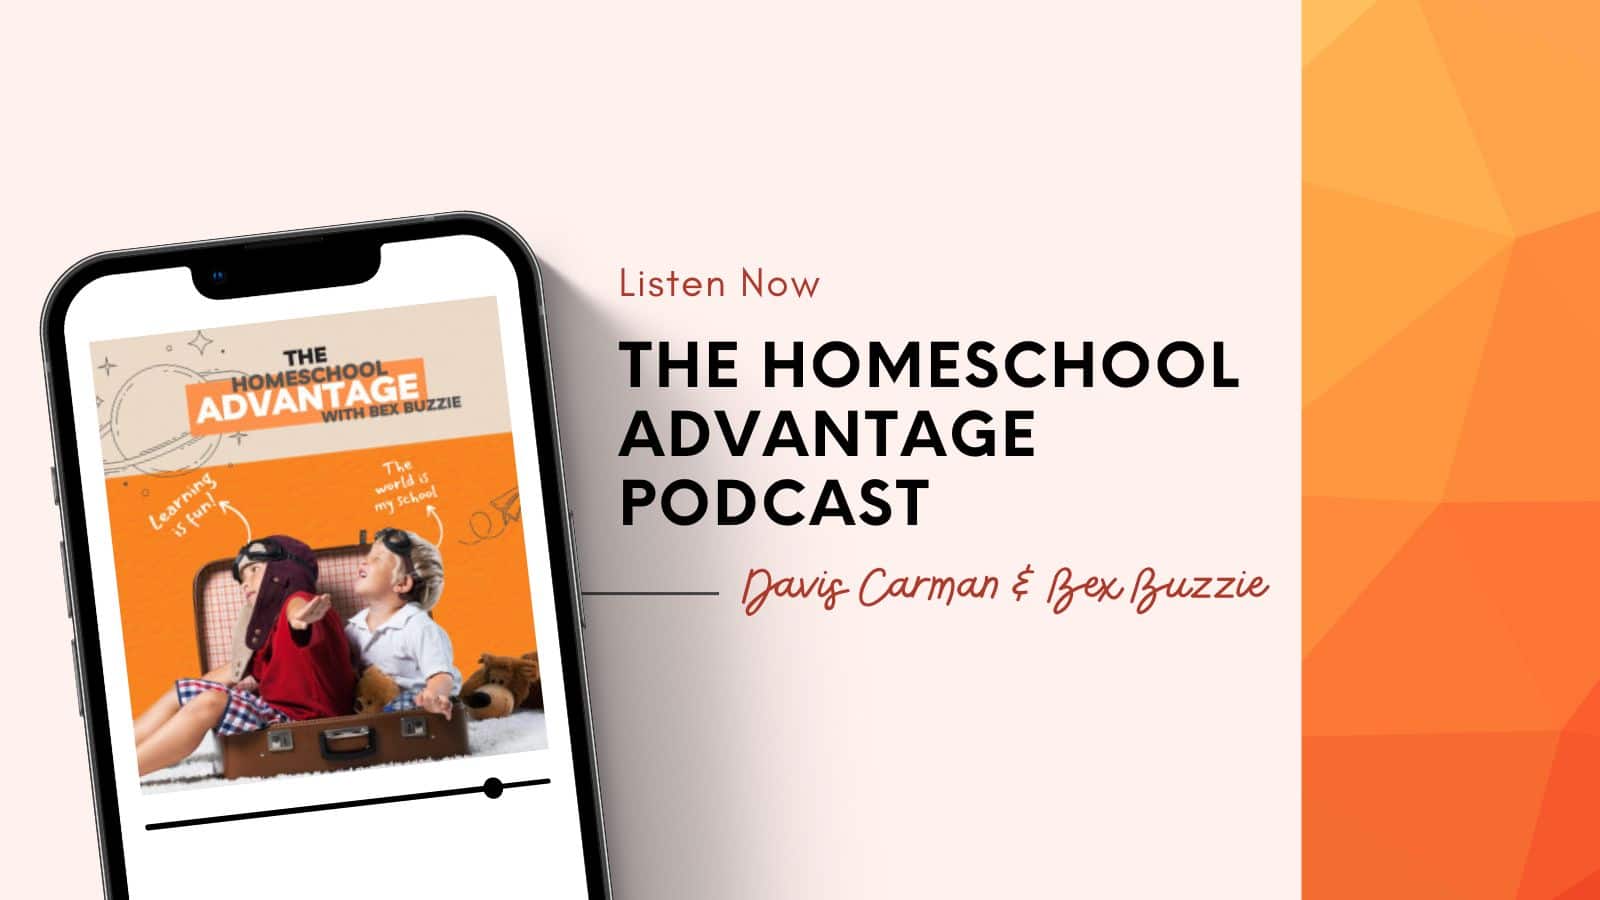 The Homeschool Journey is Worth Taking